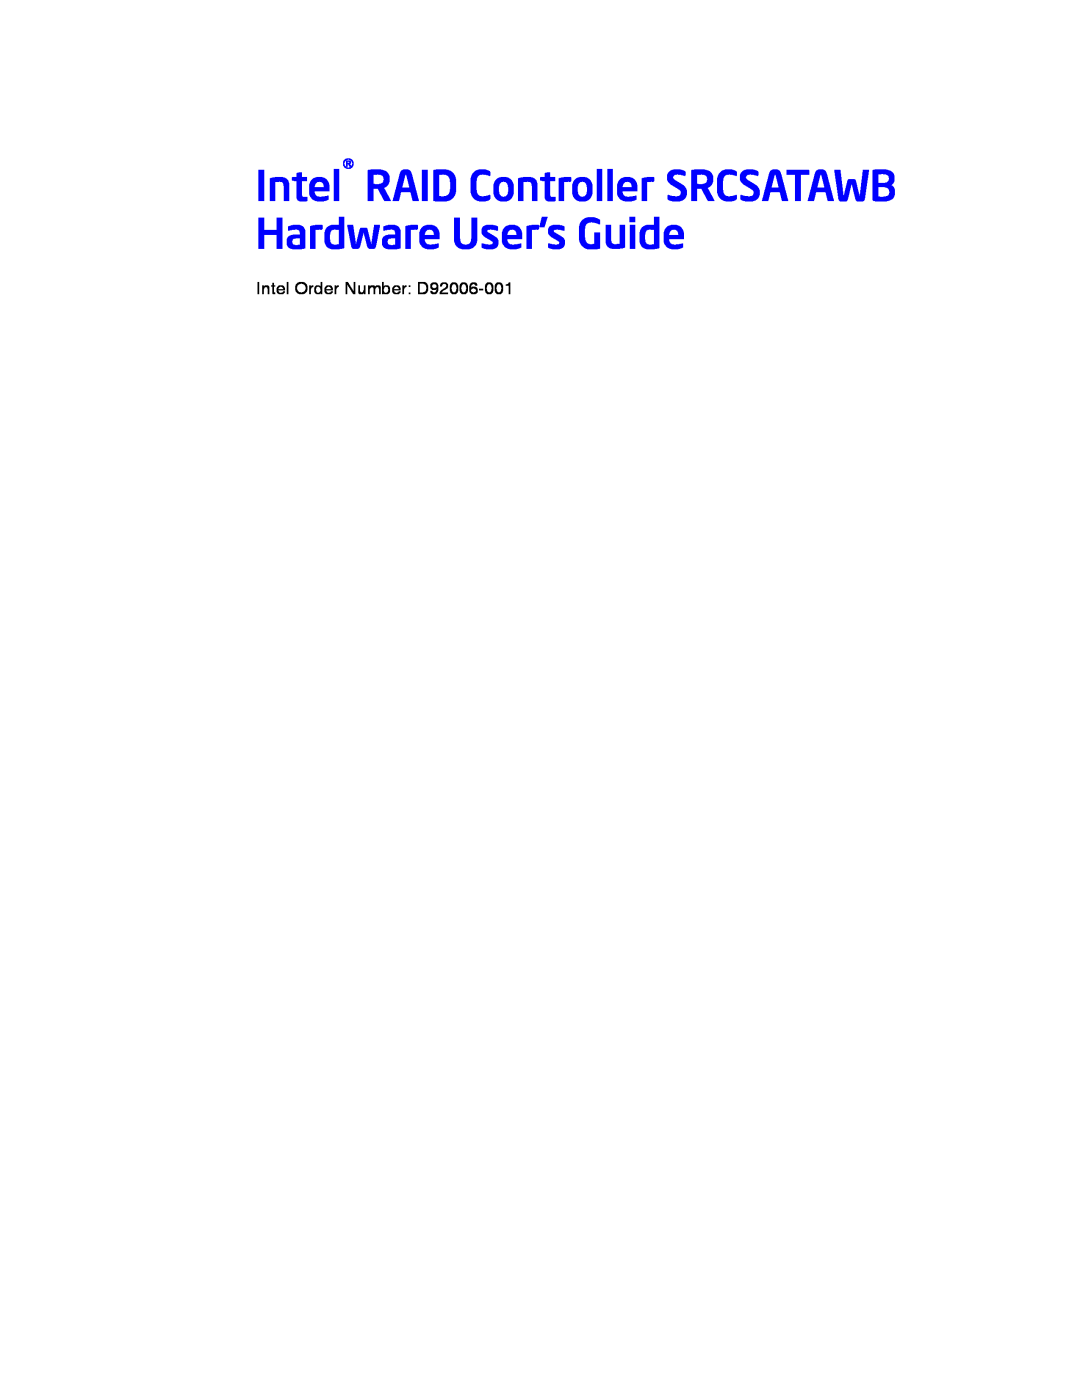 Intel SRCSATAWB manual Intel Order Number: D92006-001 